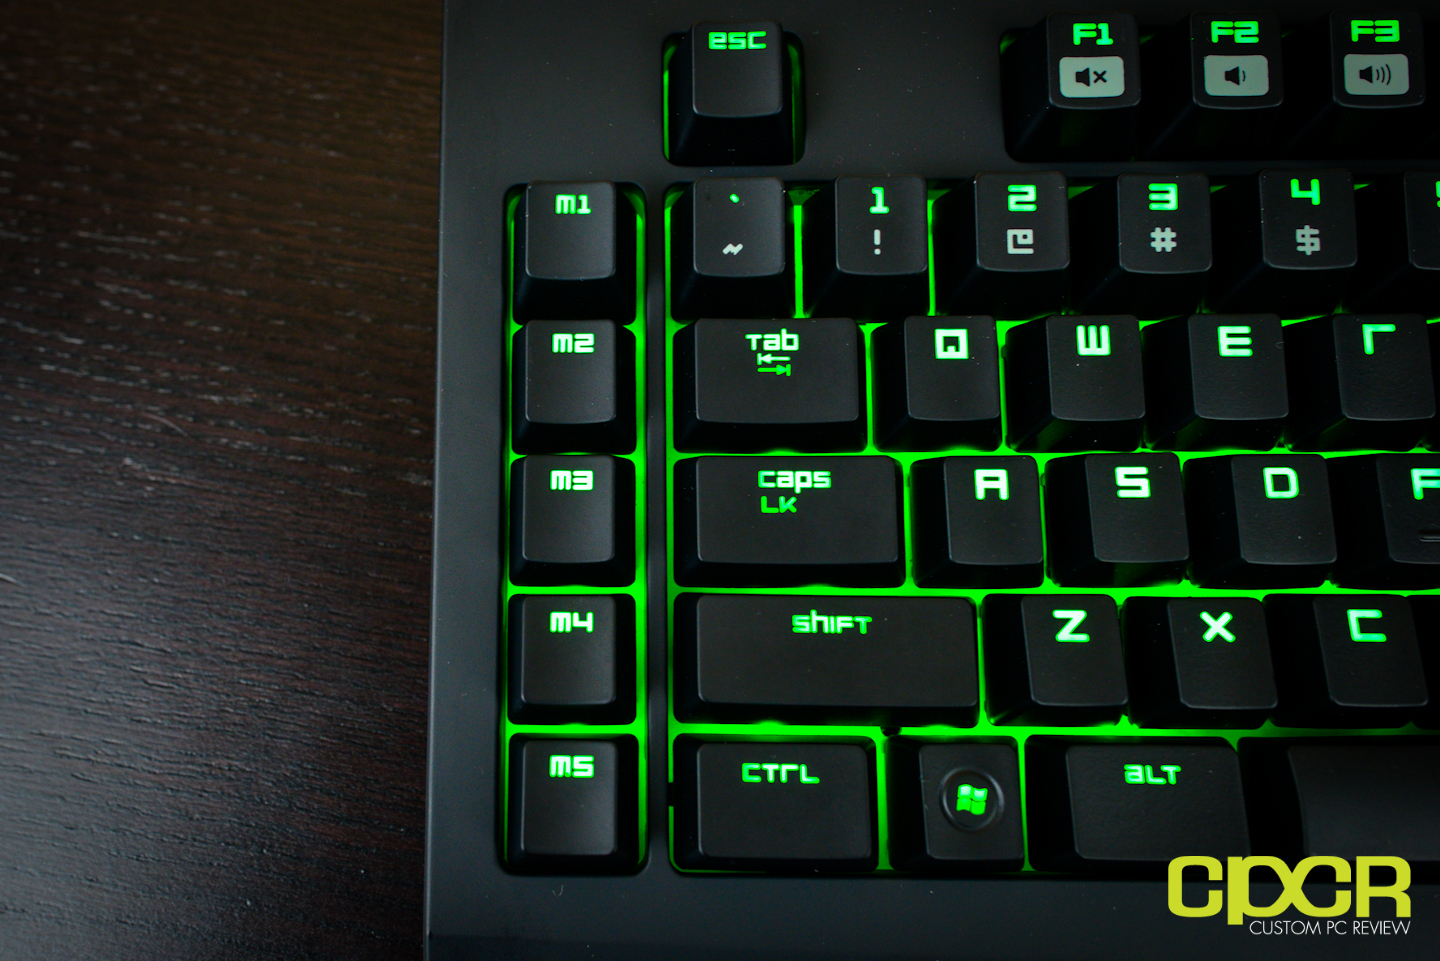 BlackWidow 2013 Ultimate Mechanical Gaming Keyboard Review | Custom PC